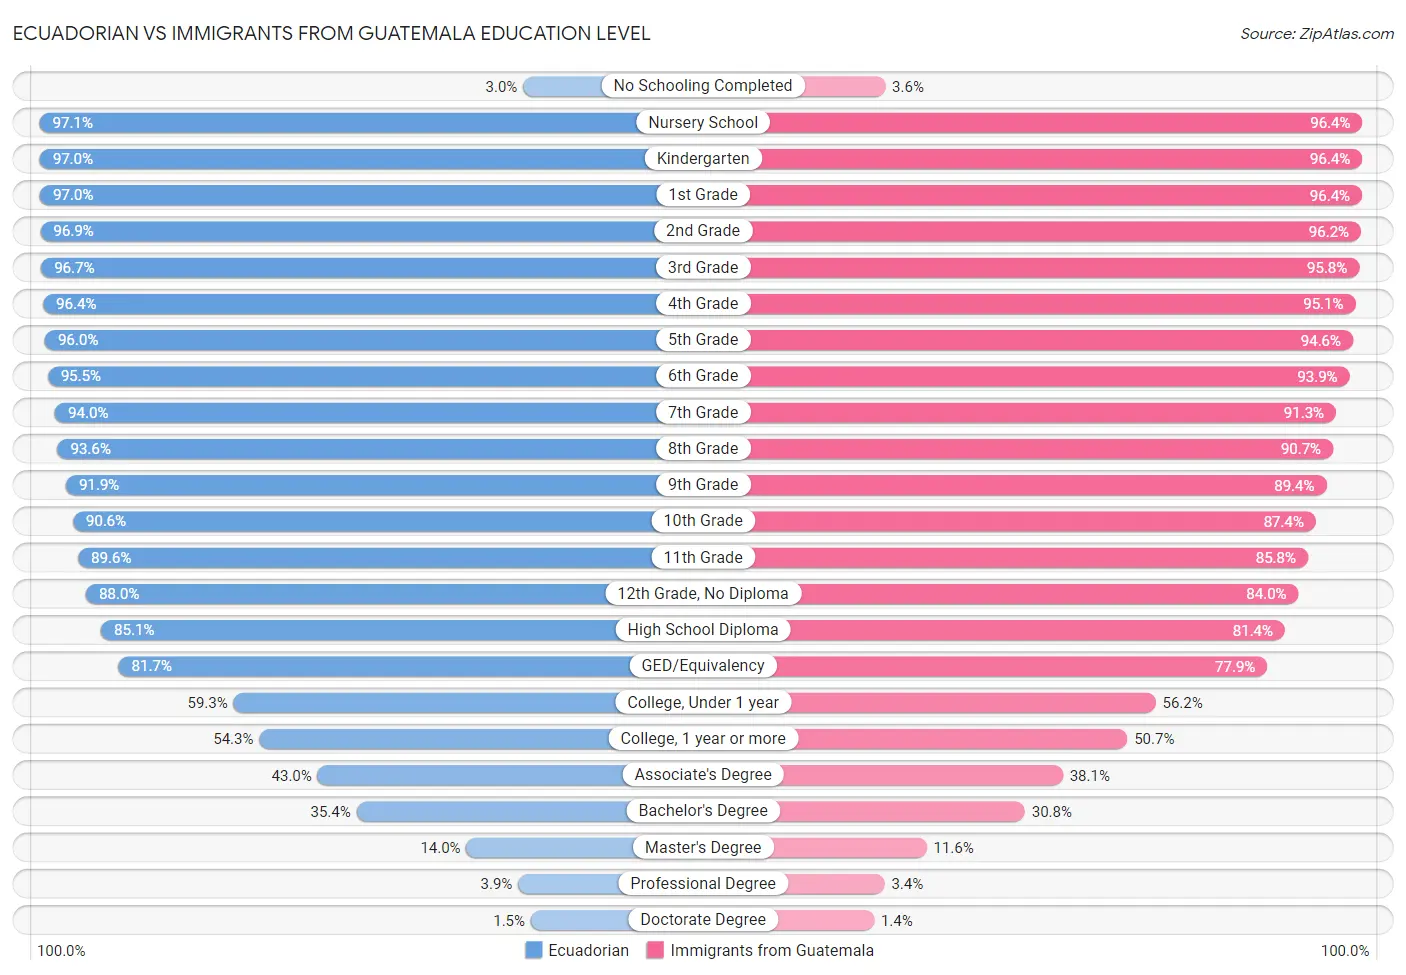 Ecuadorian vs Immigrants from Guatemala Education Level